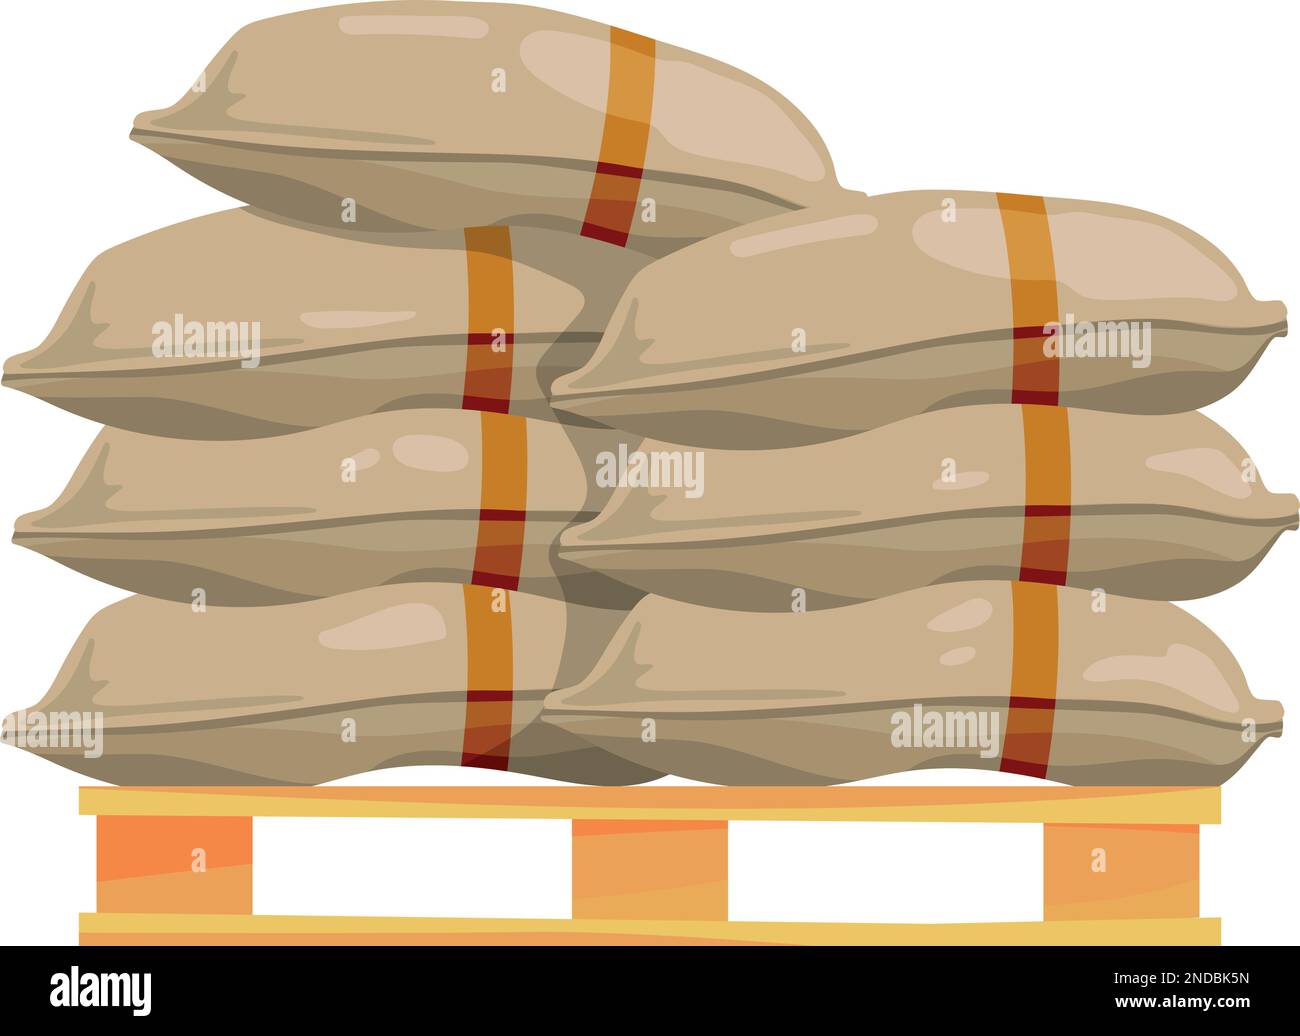 Pallet with grain bags. Flour storage. Rice sacks cargo Stock Vector